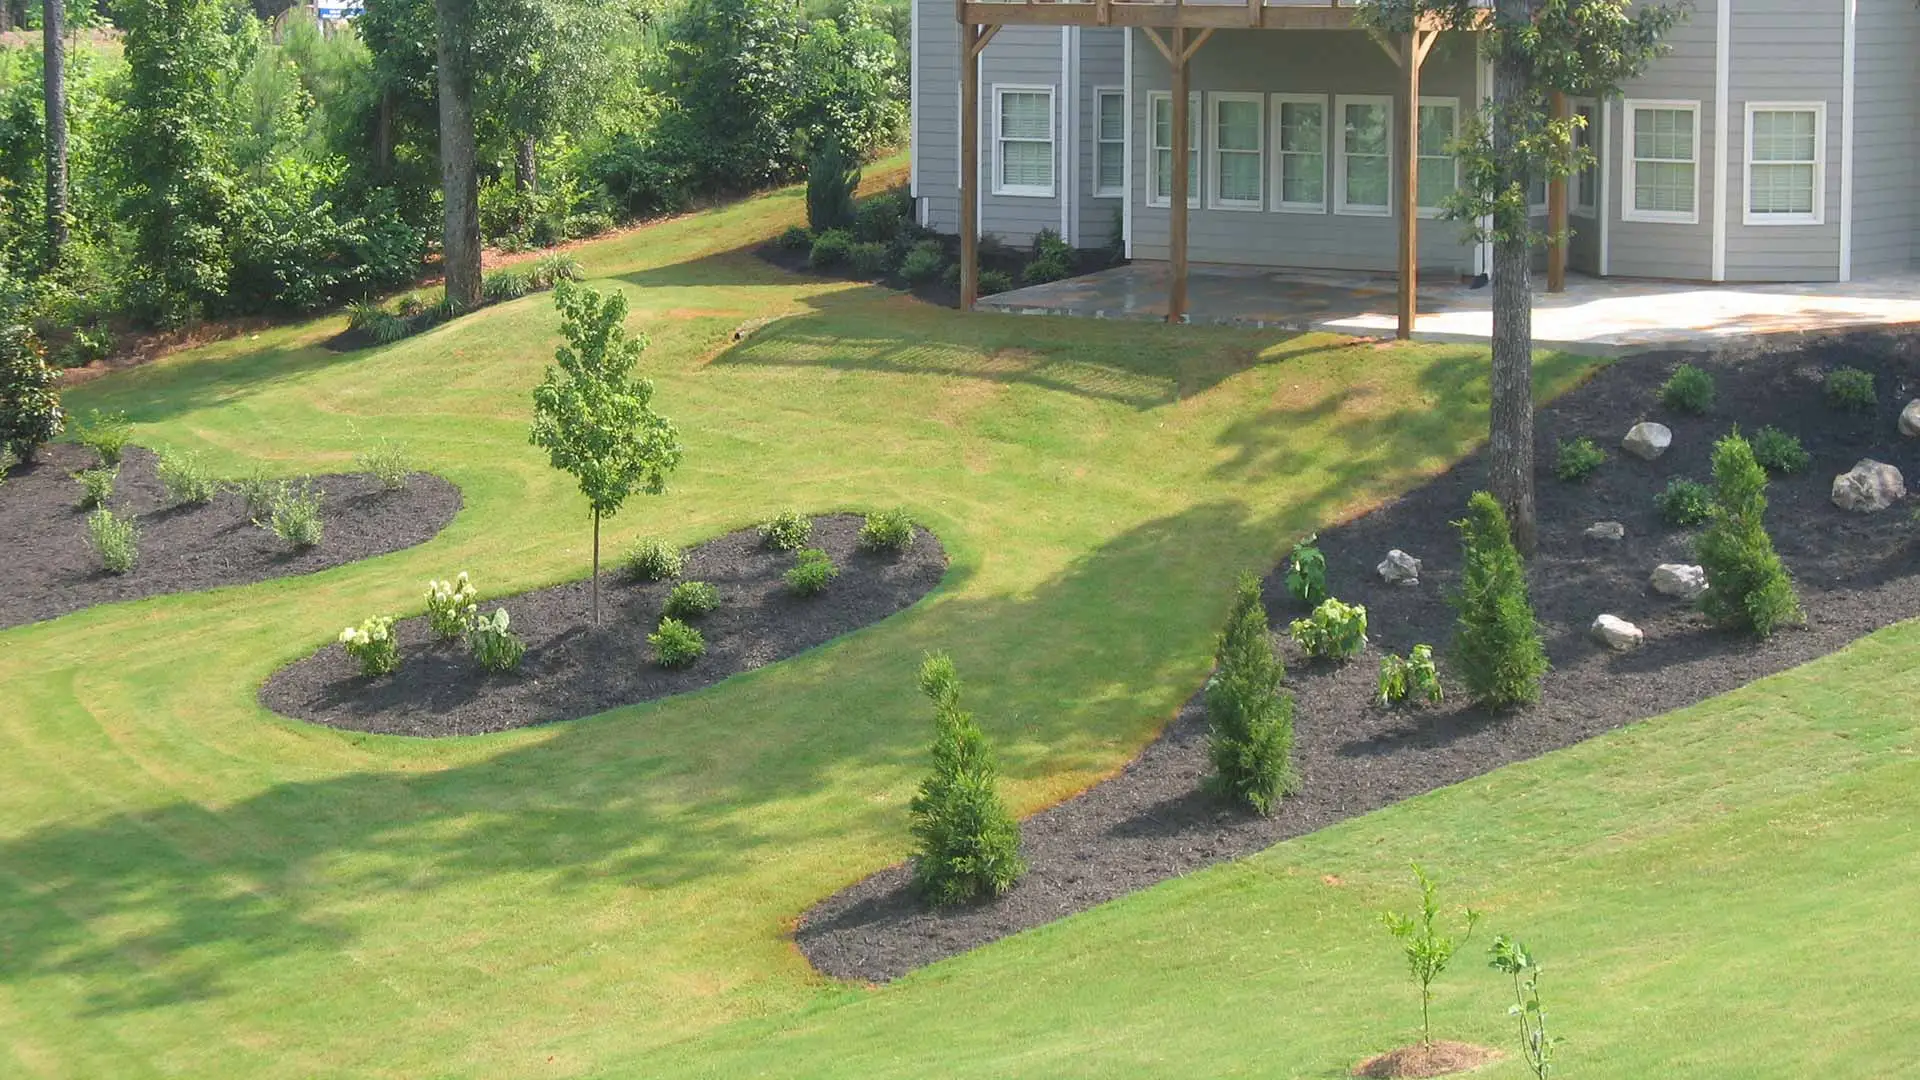 Recently landscaped home property in Marietta, GA.